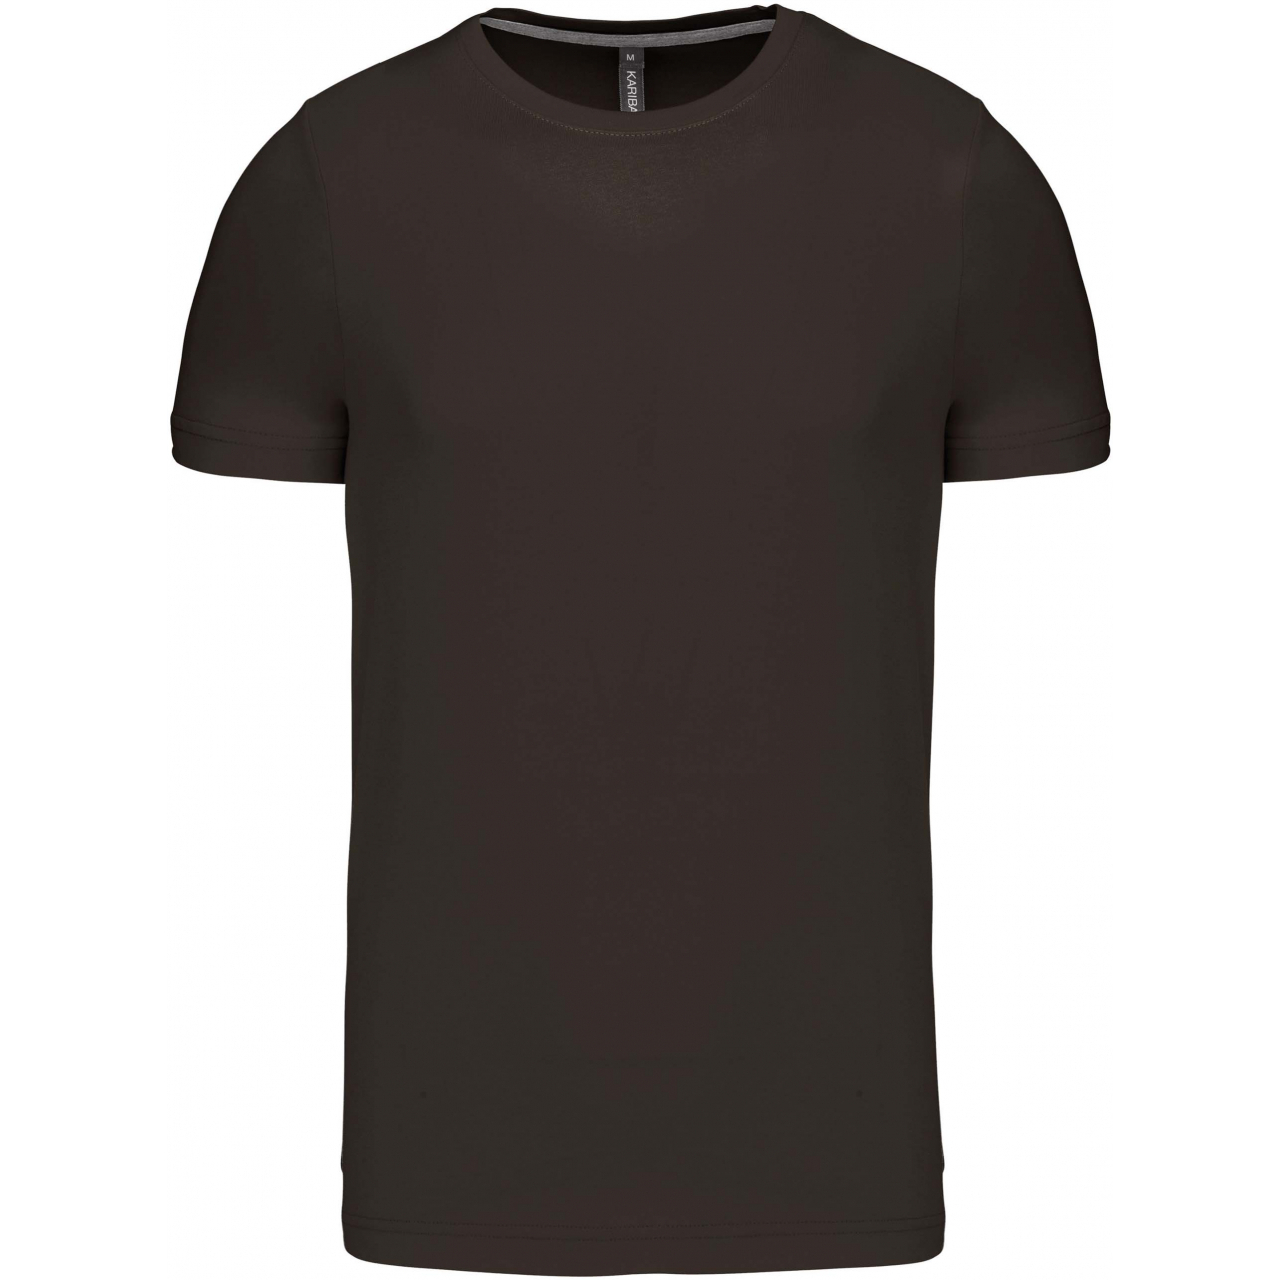 Pánské tričko Kariban krátký rukáv - tmavé khaki, XL